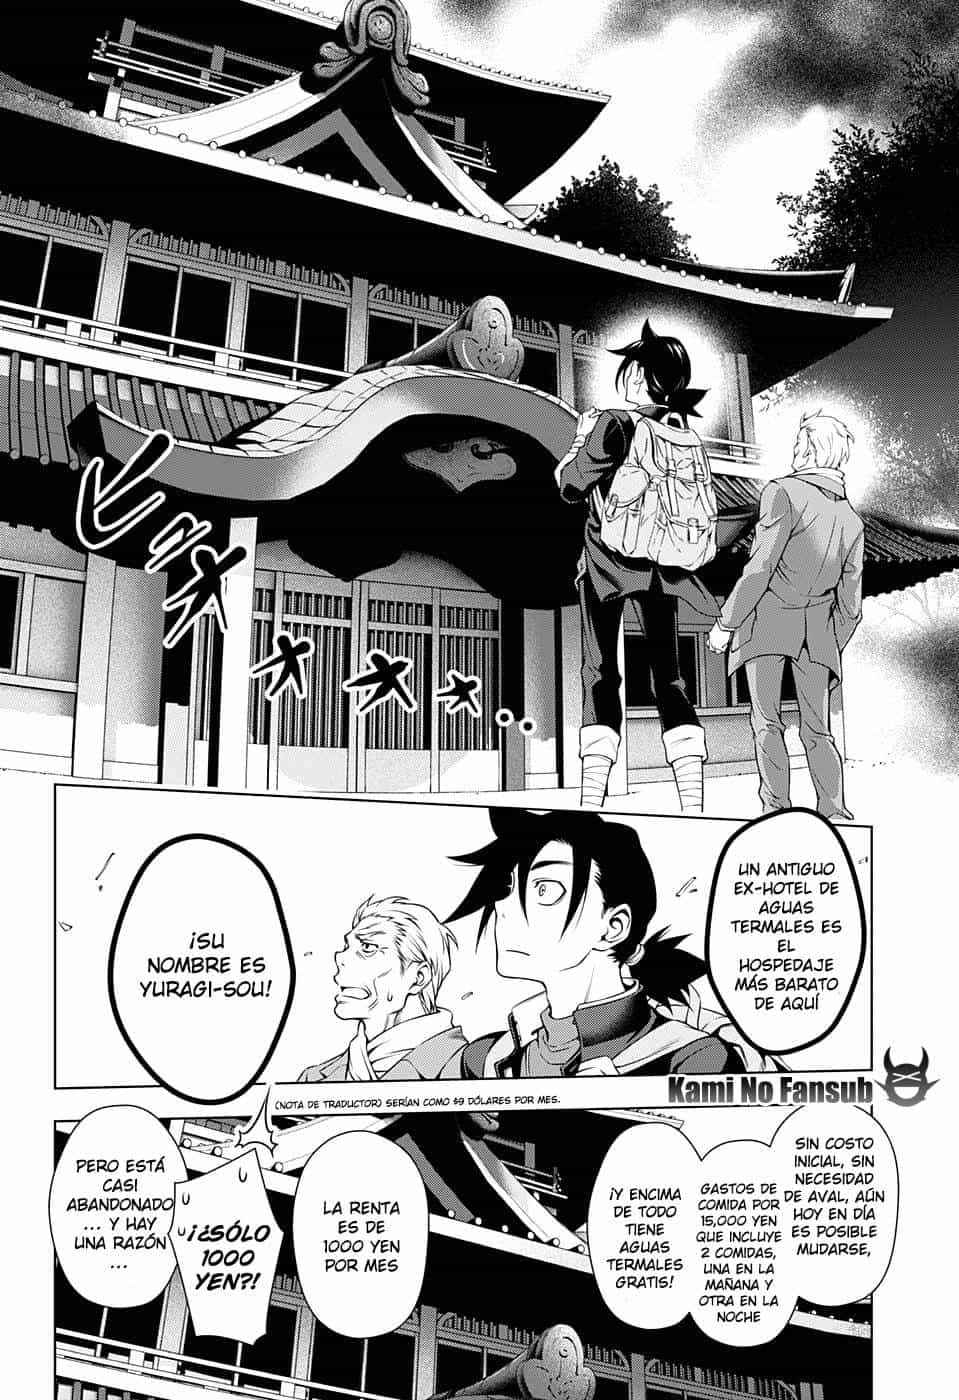 Yuragi sou no Yuuna san Manga PDF Espanol MEGA Imagen 2